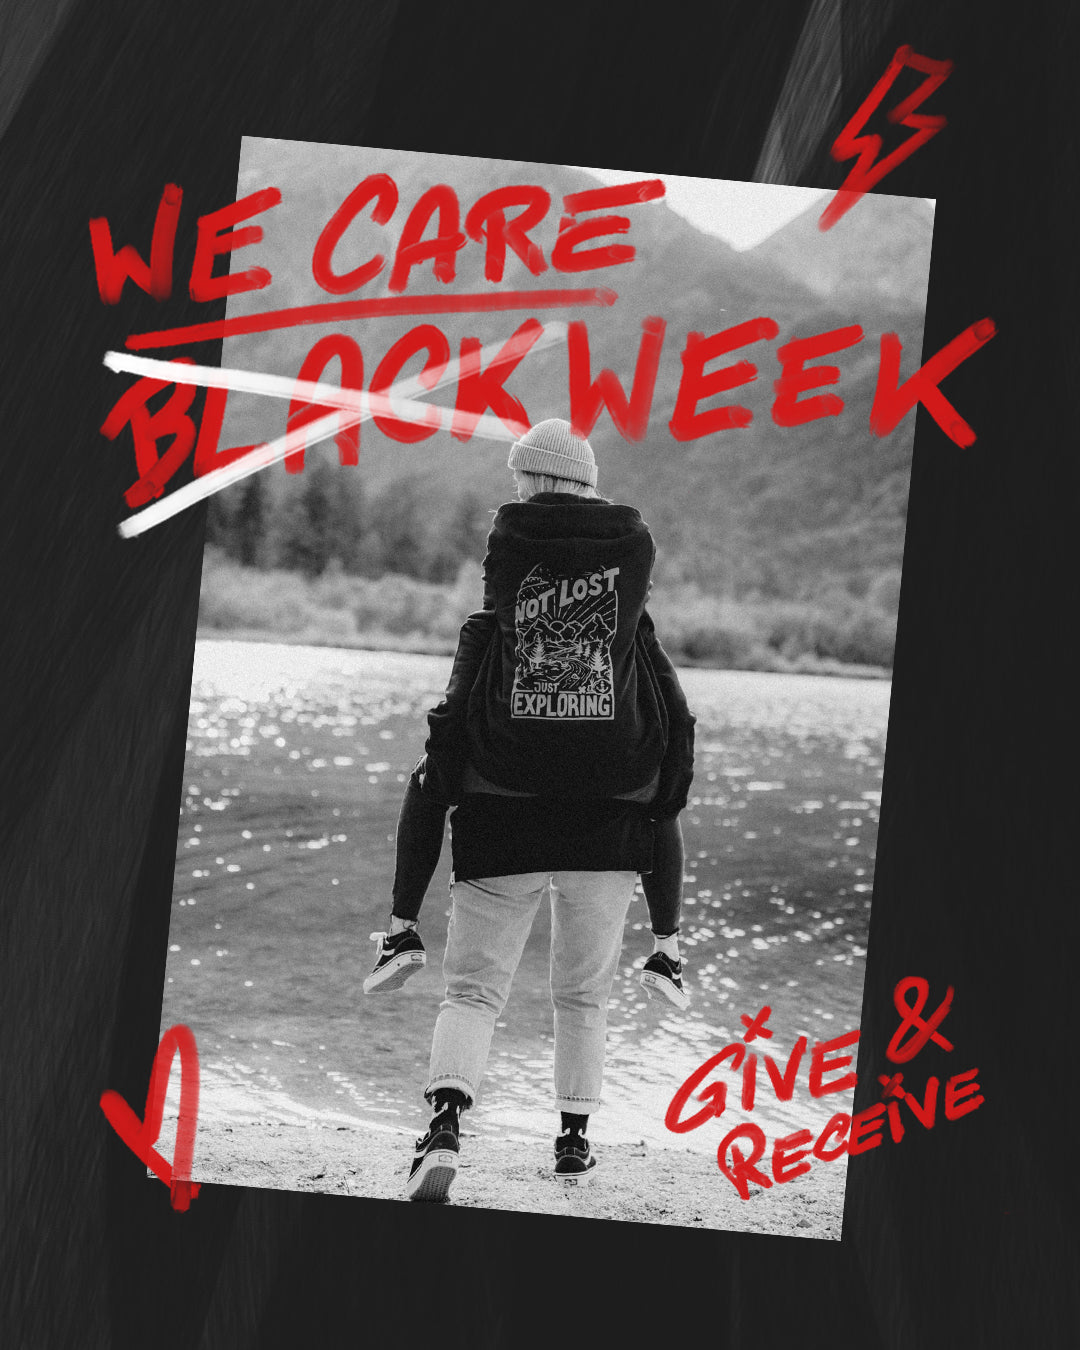 F**k Black Week - we change it to a We Care Week